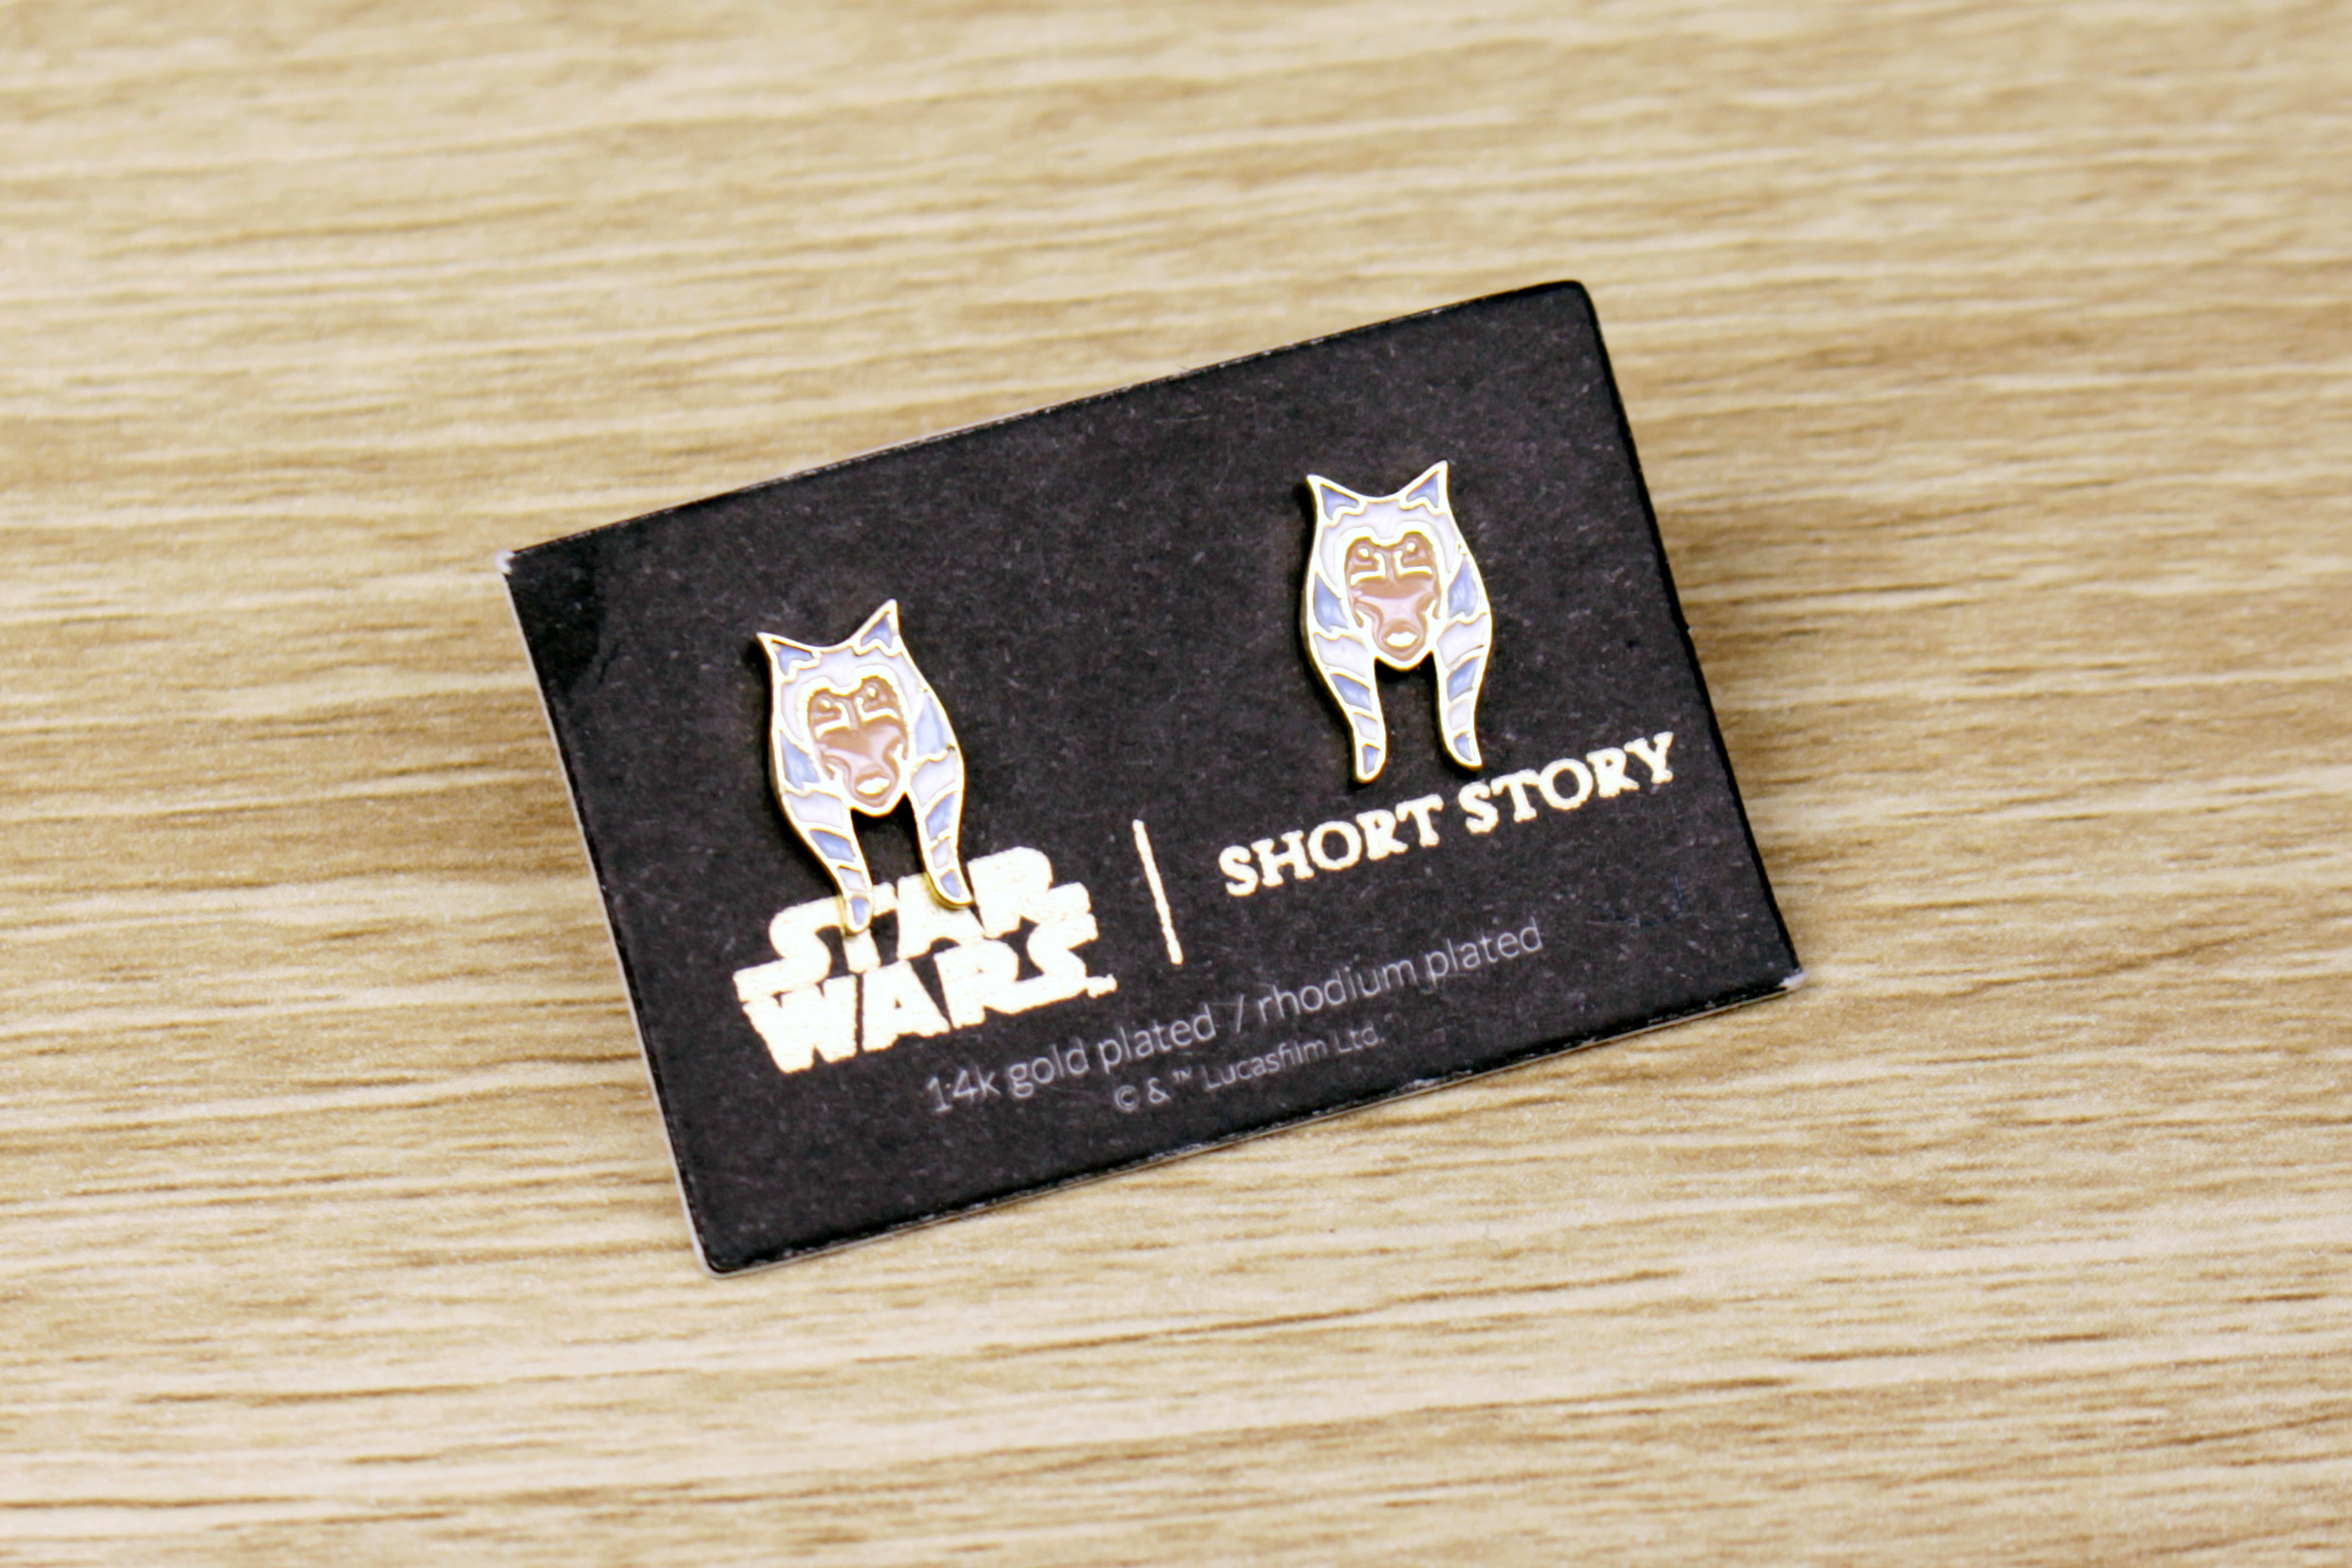 Short Story x Star Wars - Ahsoka Tano Earrings